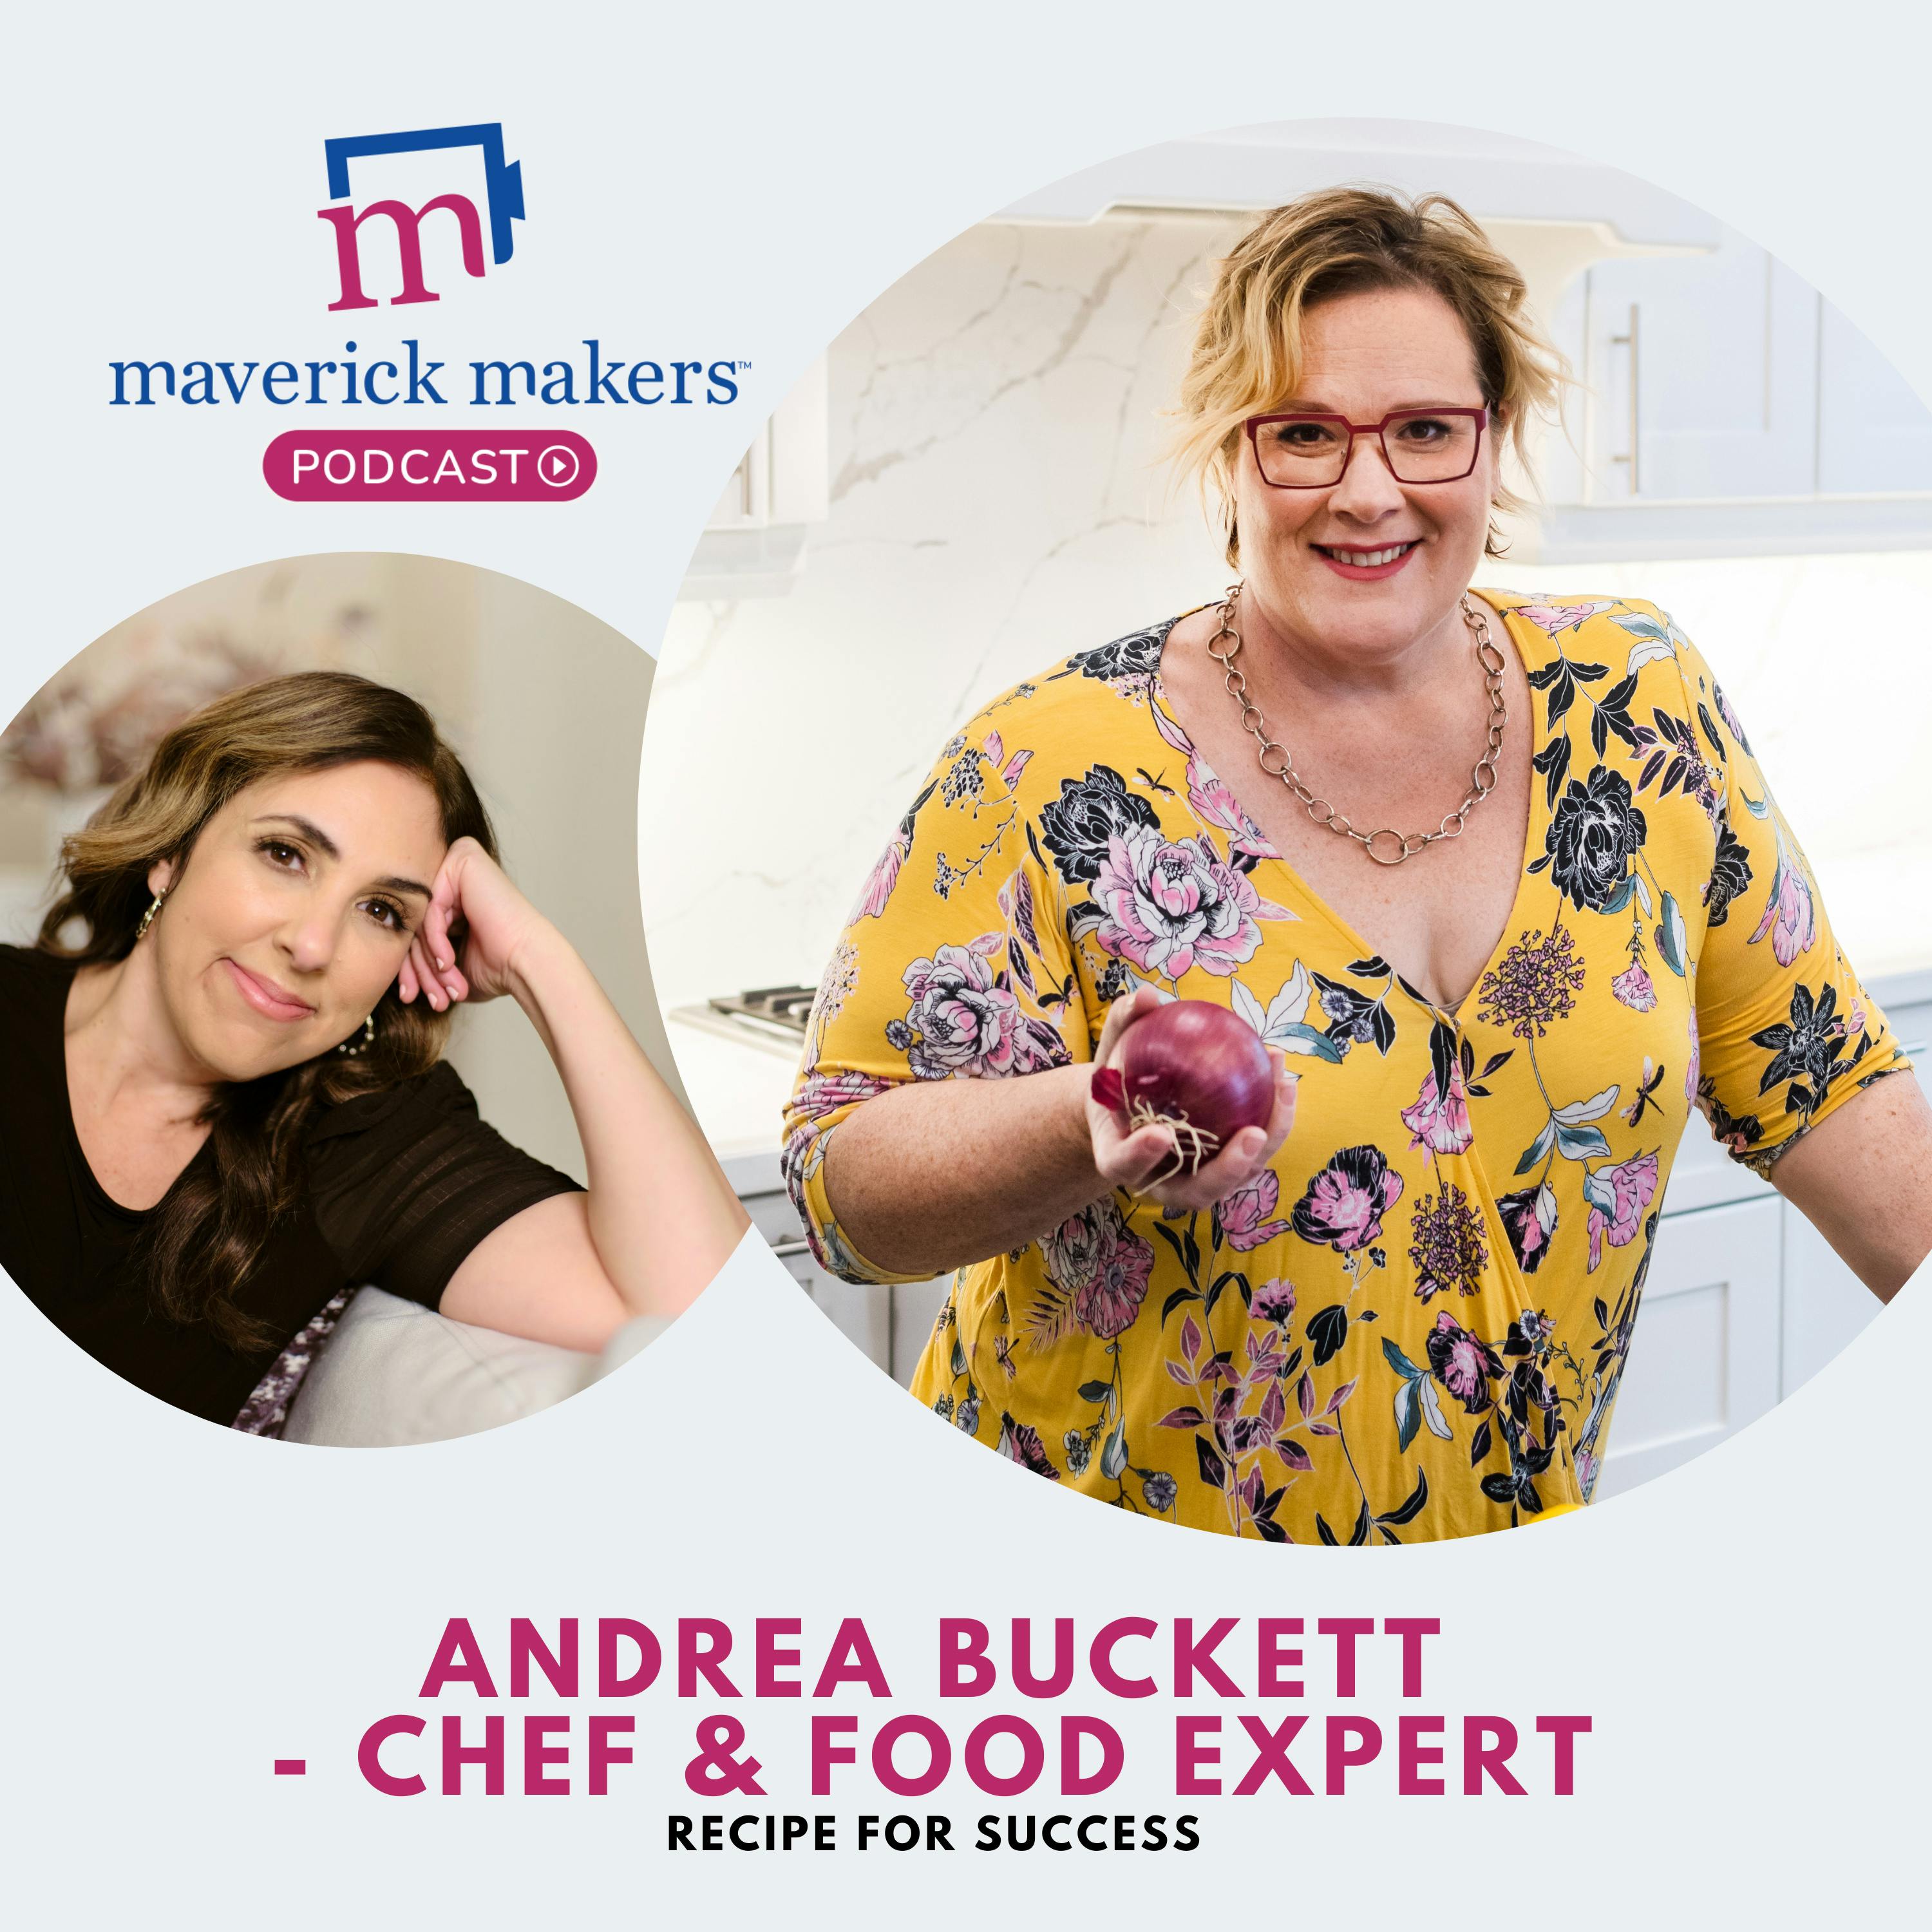 Andrea Buckett: What's the Recipe for Success?